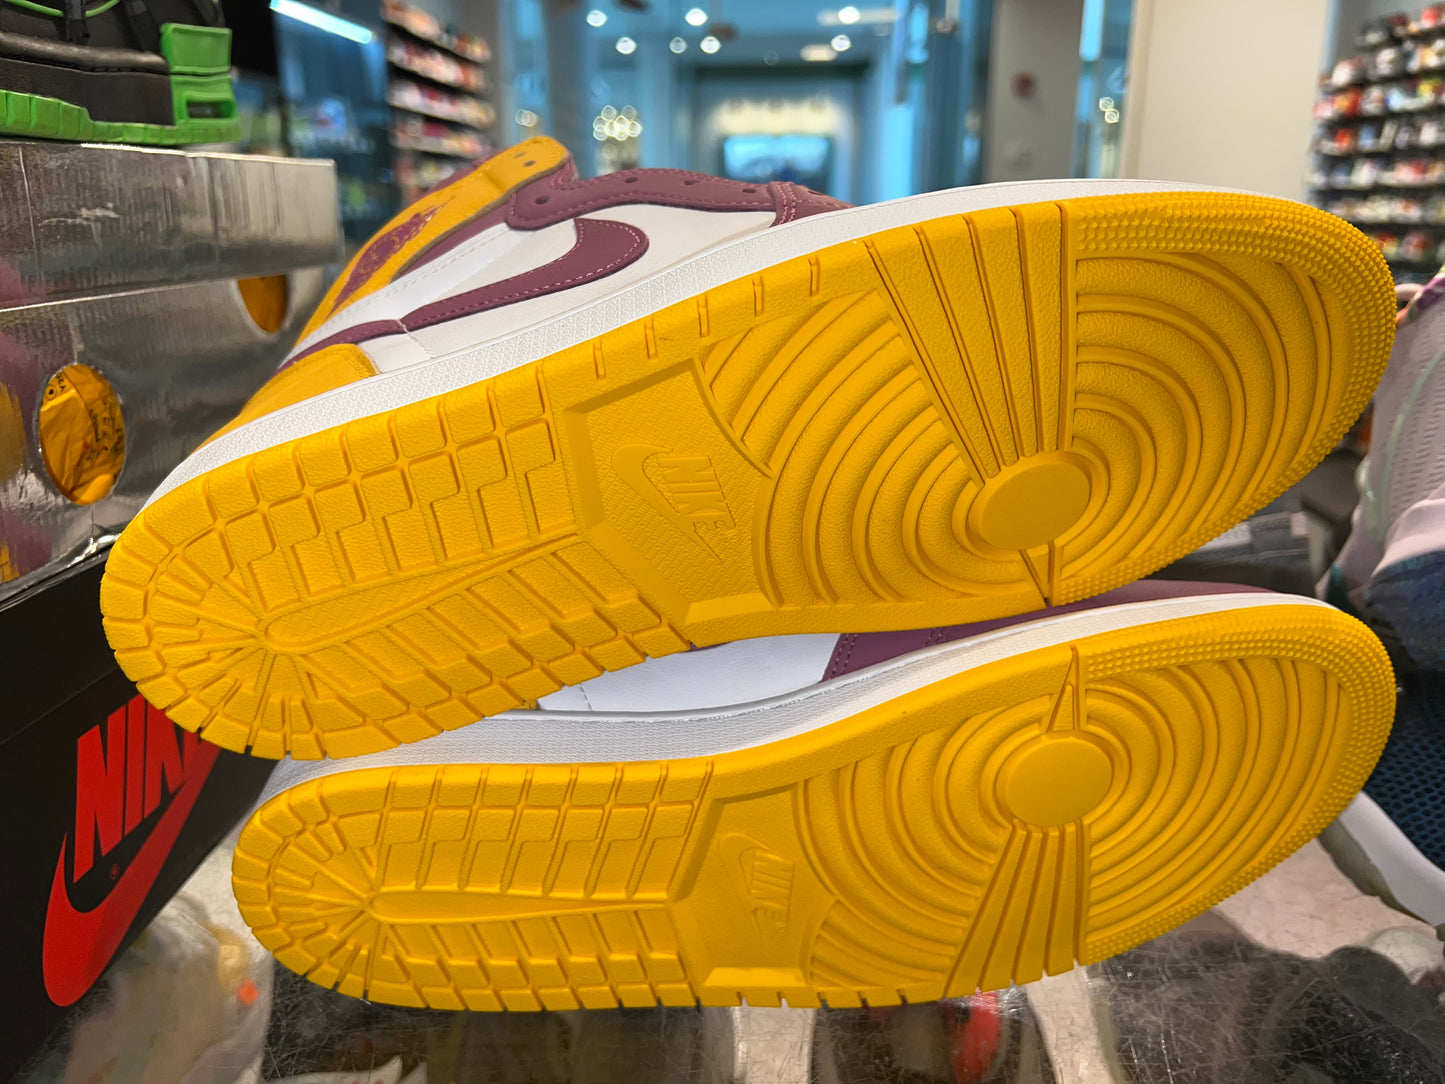 Size 11 Air Jordan 1 “Brotherhood” Brand New (Mall)